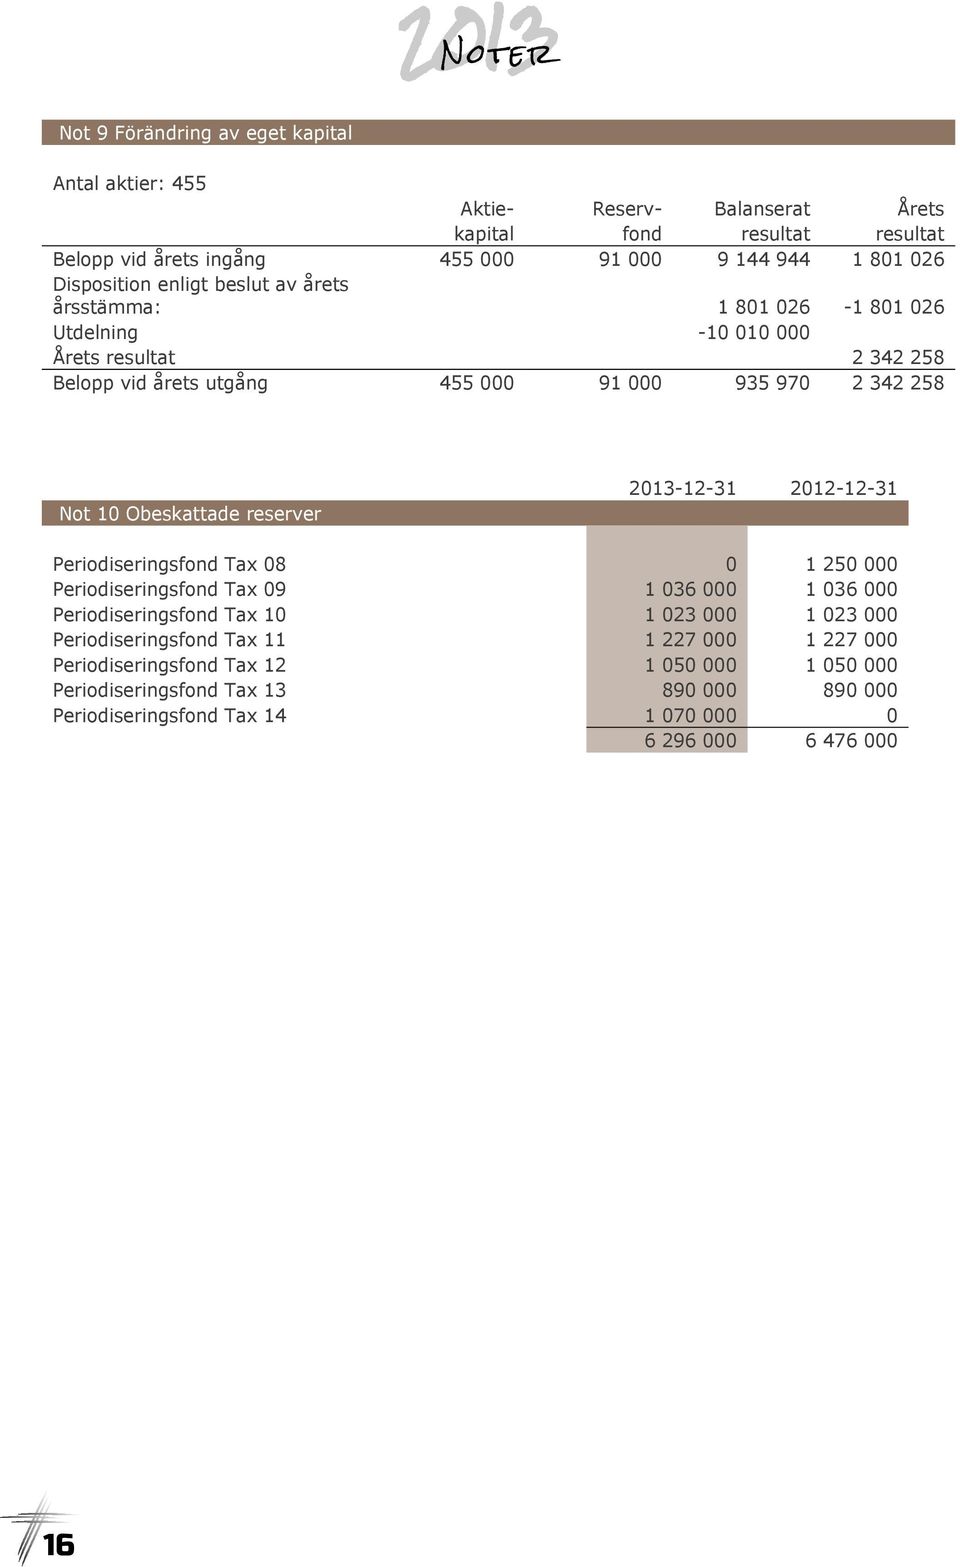 Obeskattade reserver 2013-12-31 2012-12-31 Periodiseringsfond Tax 08 0 1 250 000 Periodiseringsfond Tax 09 1 036 000 1 036 000 Periodiseringsfond Tax 10 1 023 000 1 023 000